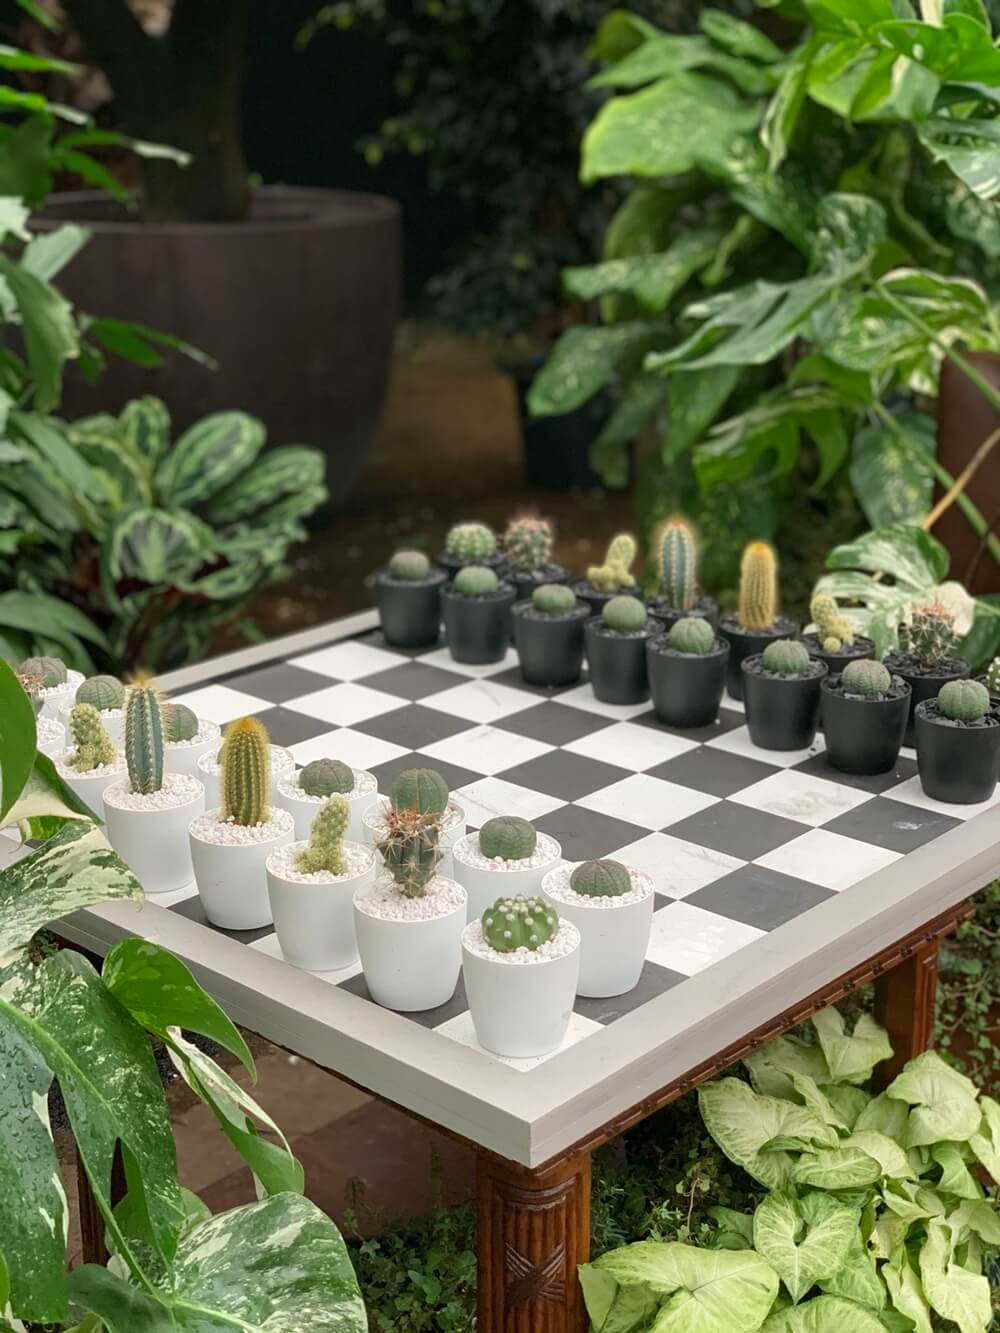 Garden chess board